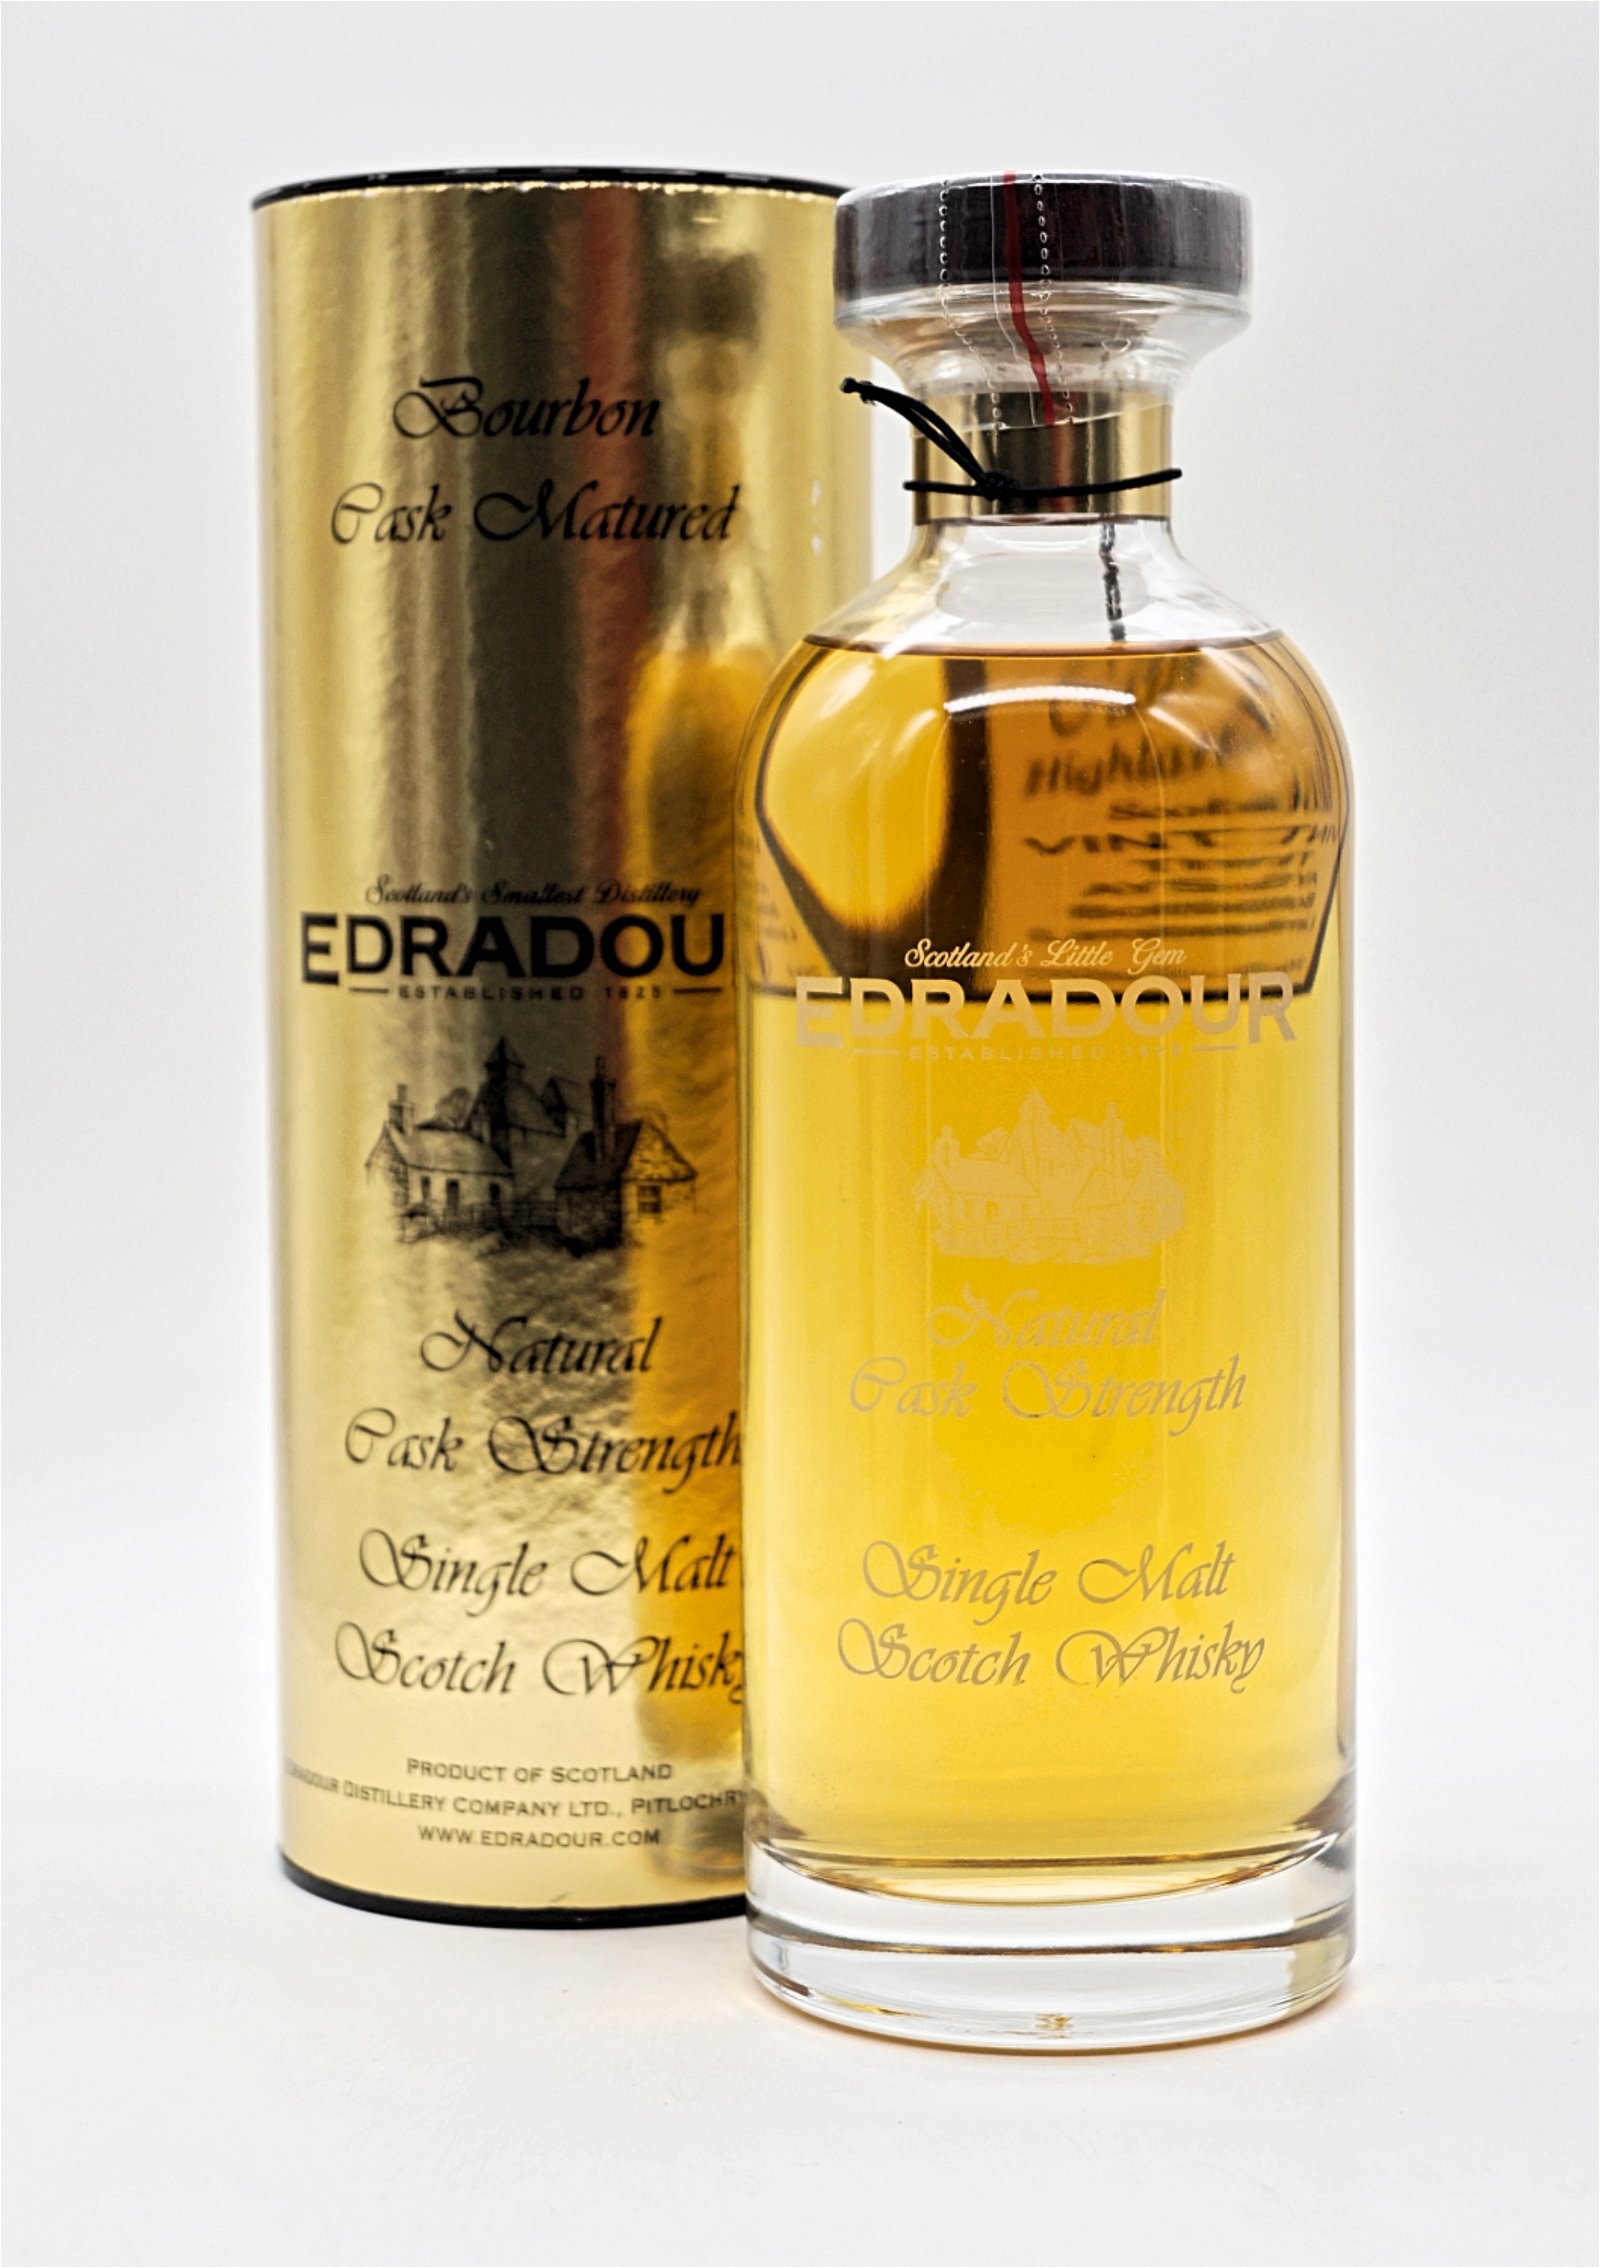 Edradour Natural Cask Strength Bourbon Cask Matured Vintage 2006 Single Malt Scotch Whisky